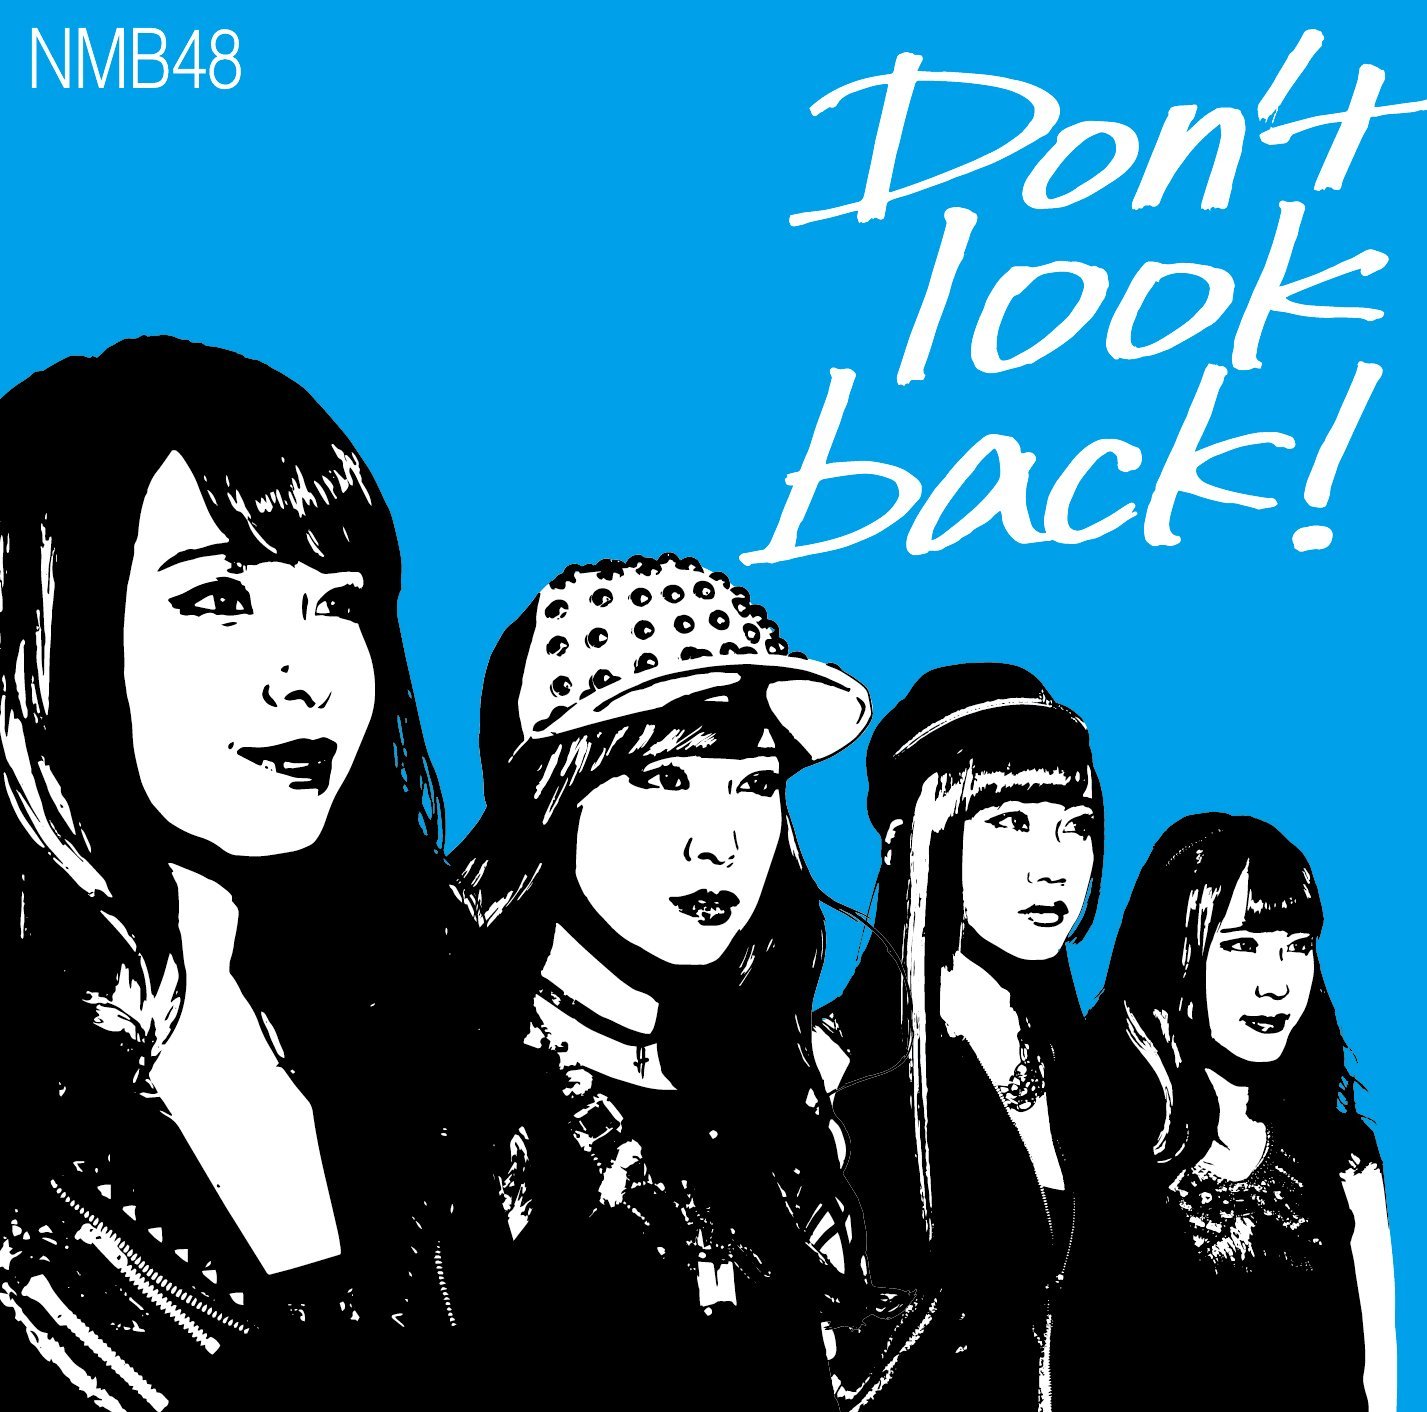 NMB48/Don't look back!(初回版TYPE-C)